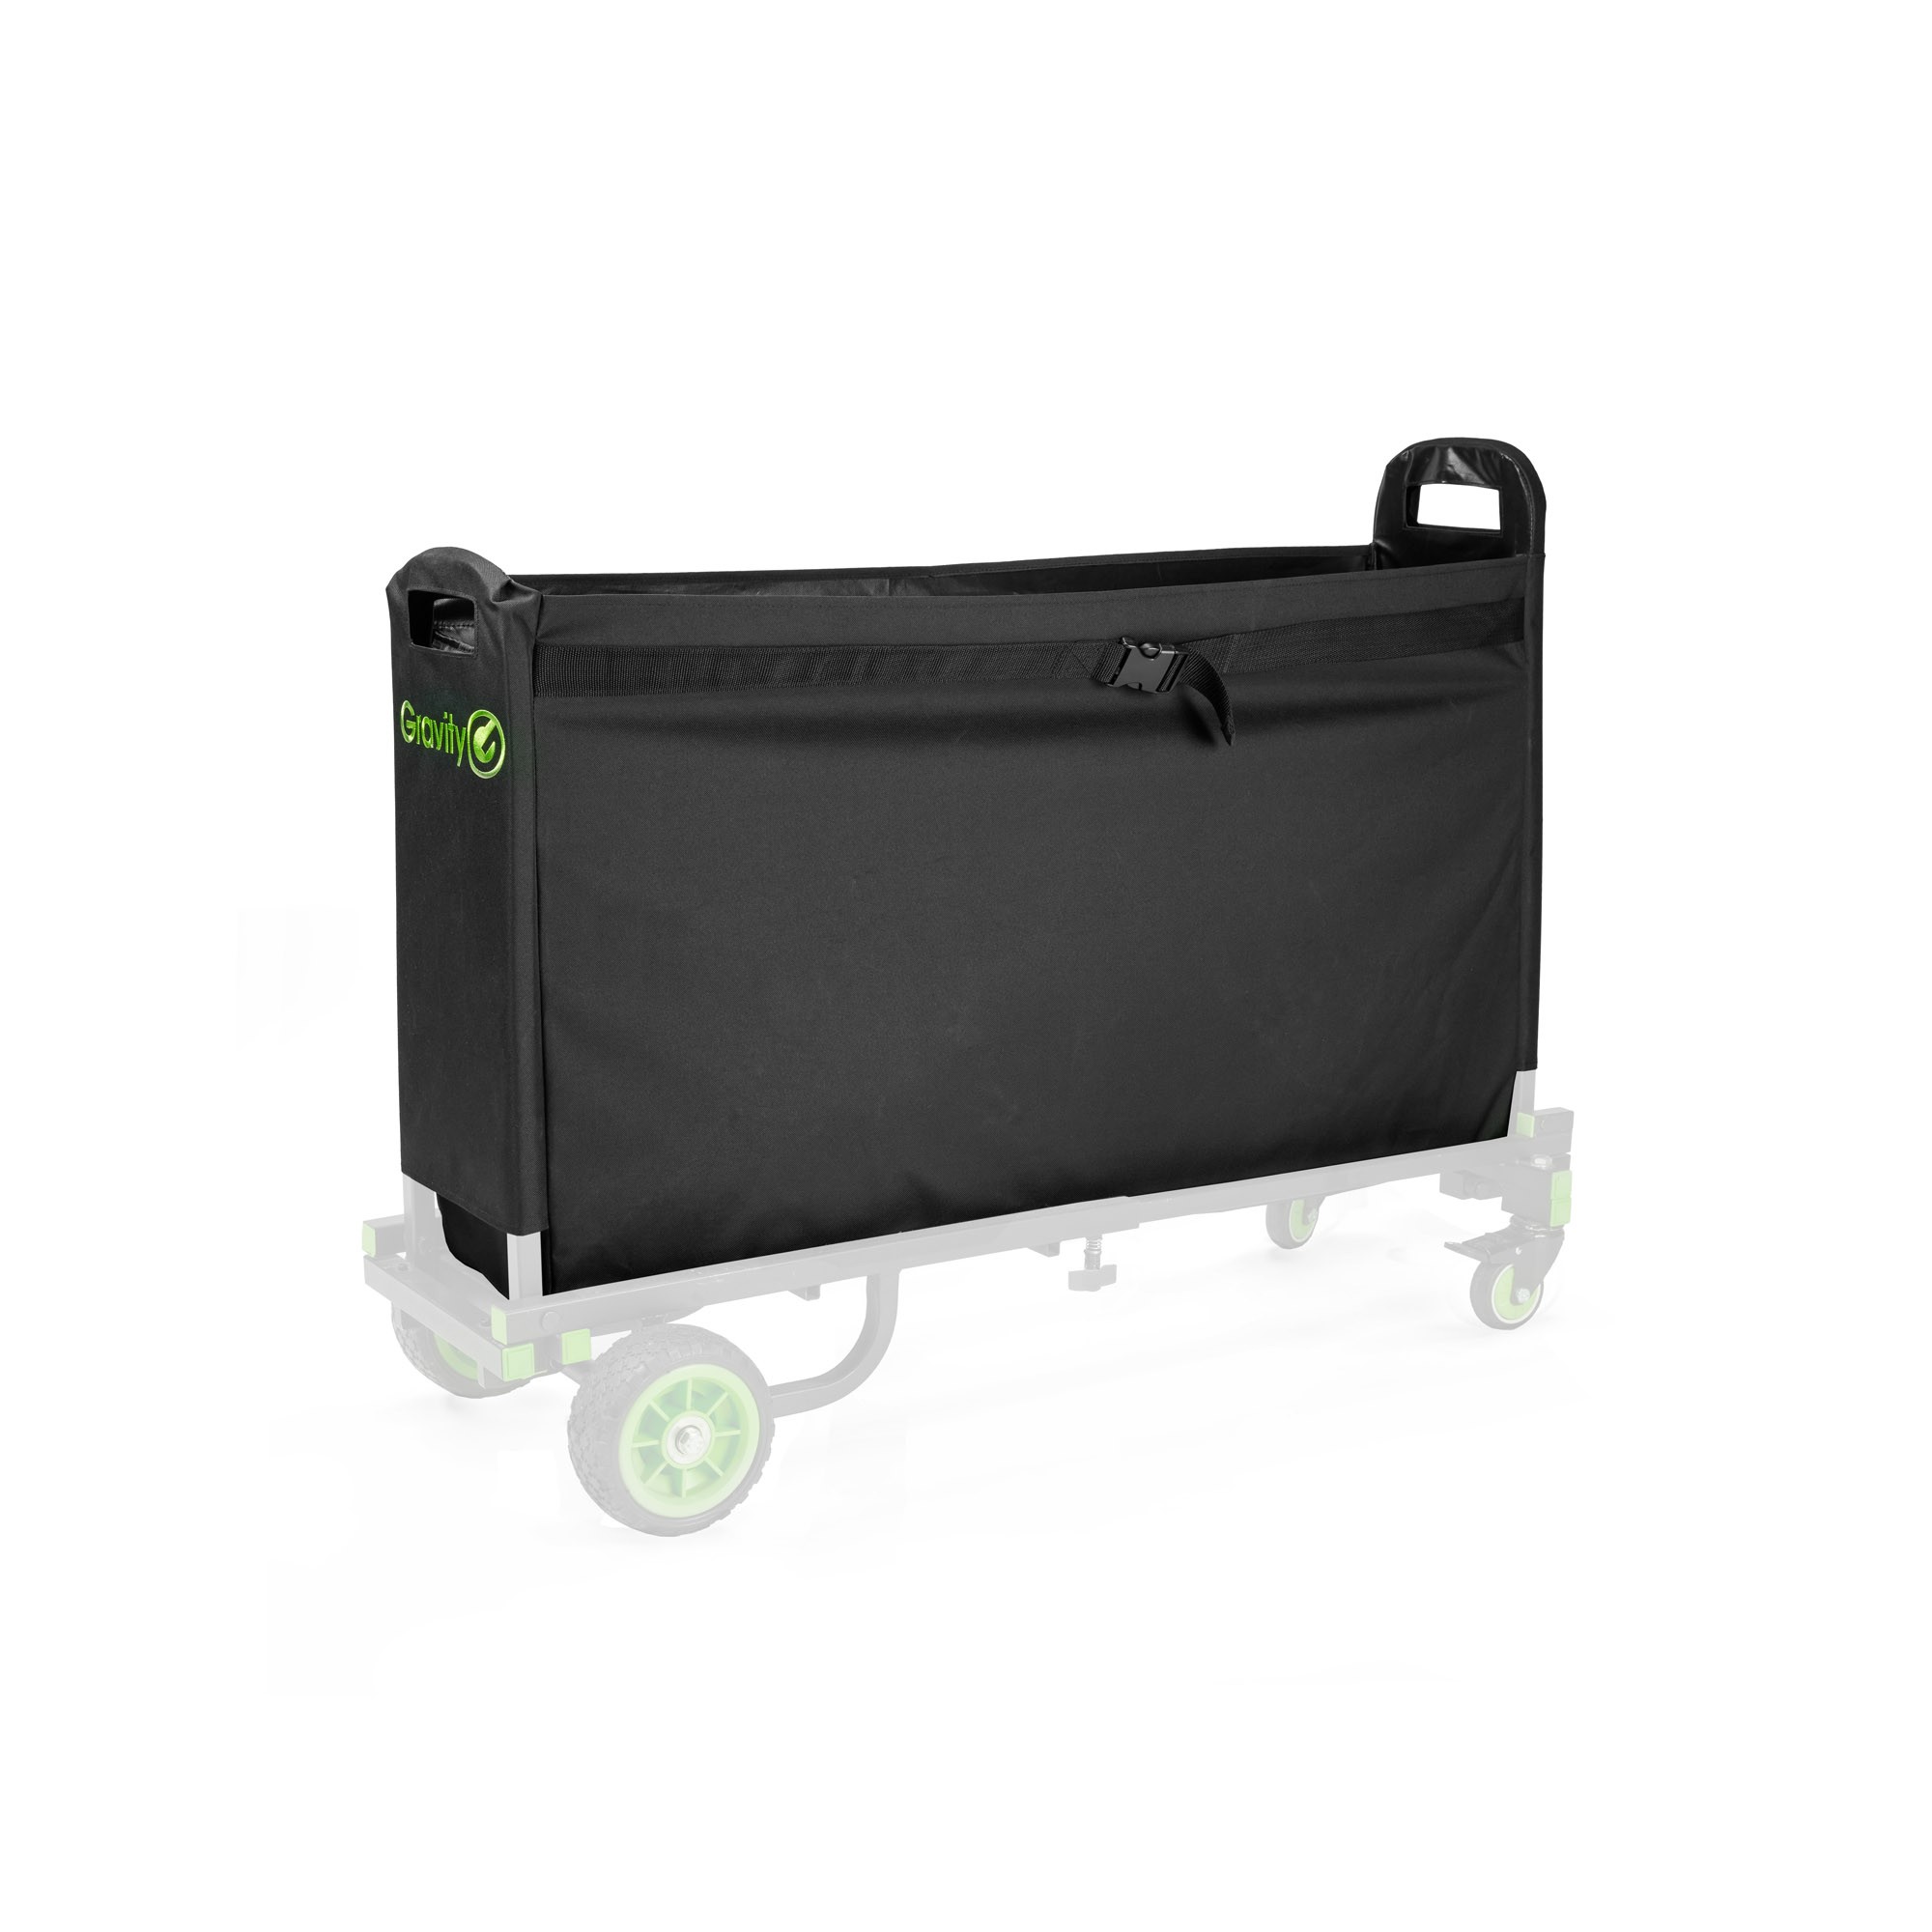 Gravity Stands BG CART M 1 | Wagon Bag for CART M 01 B